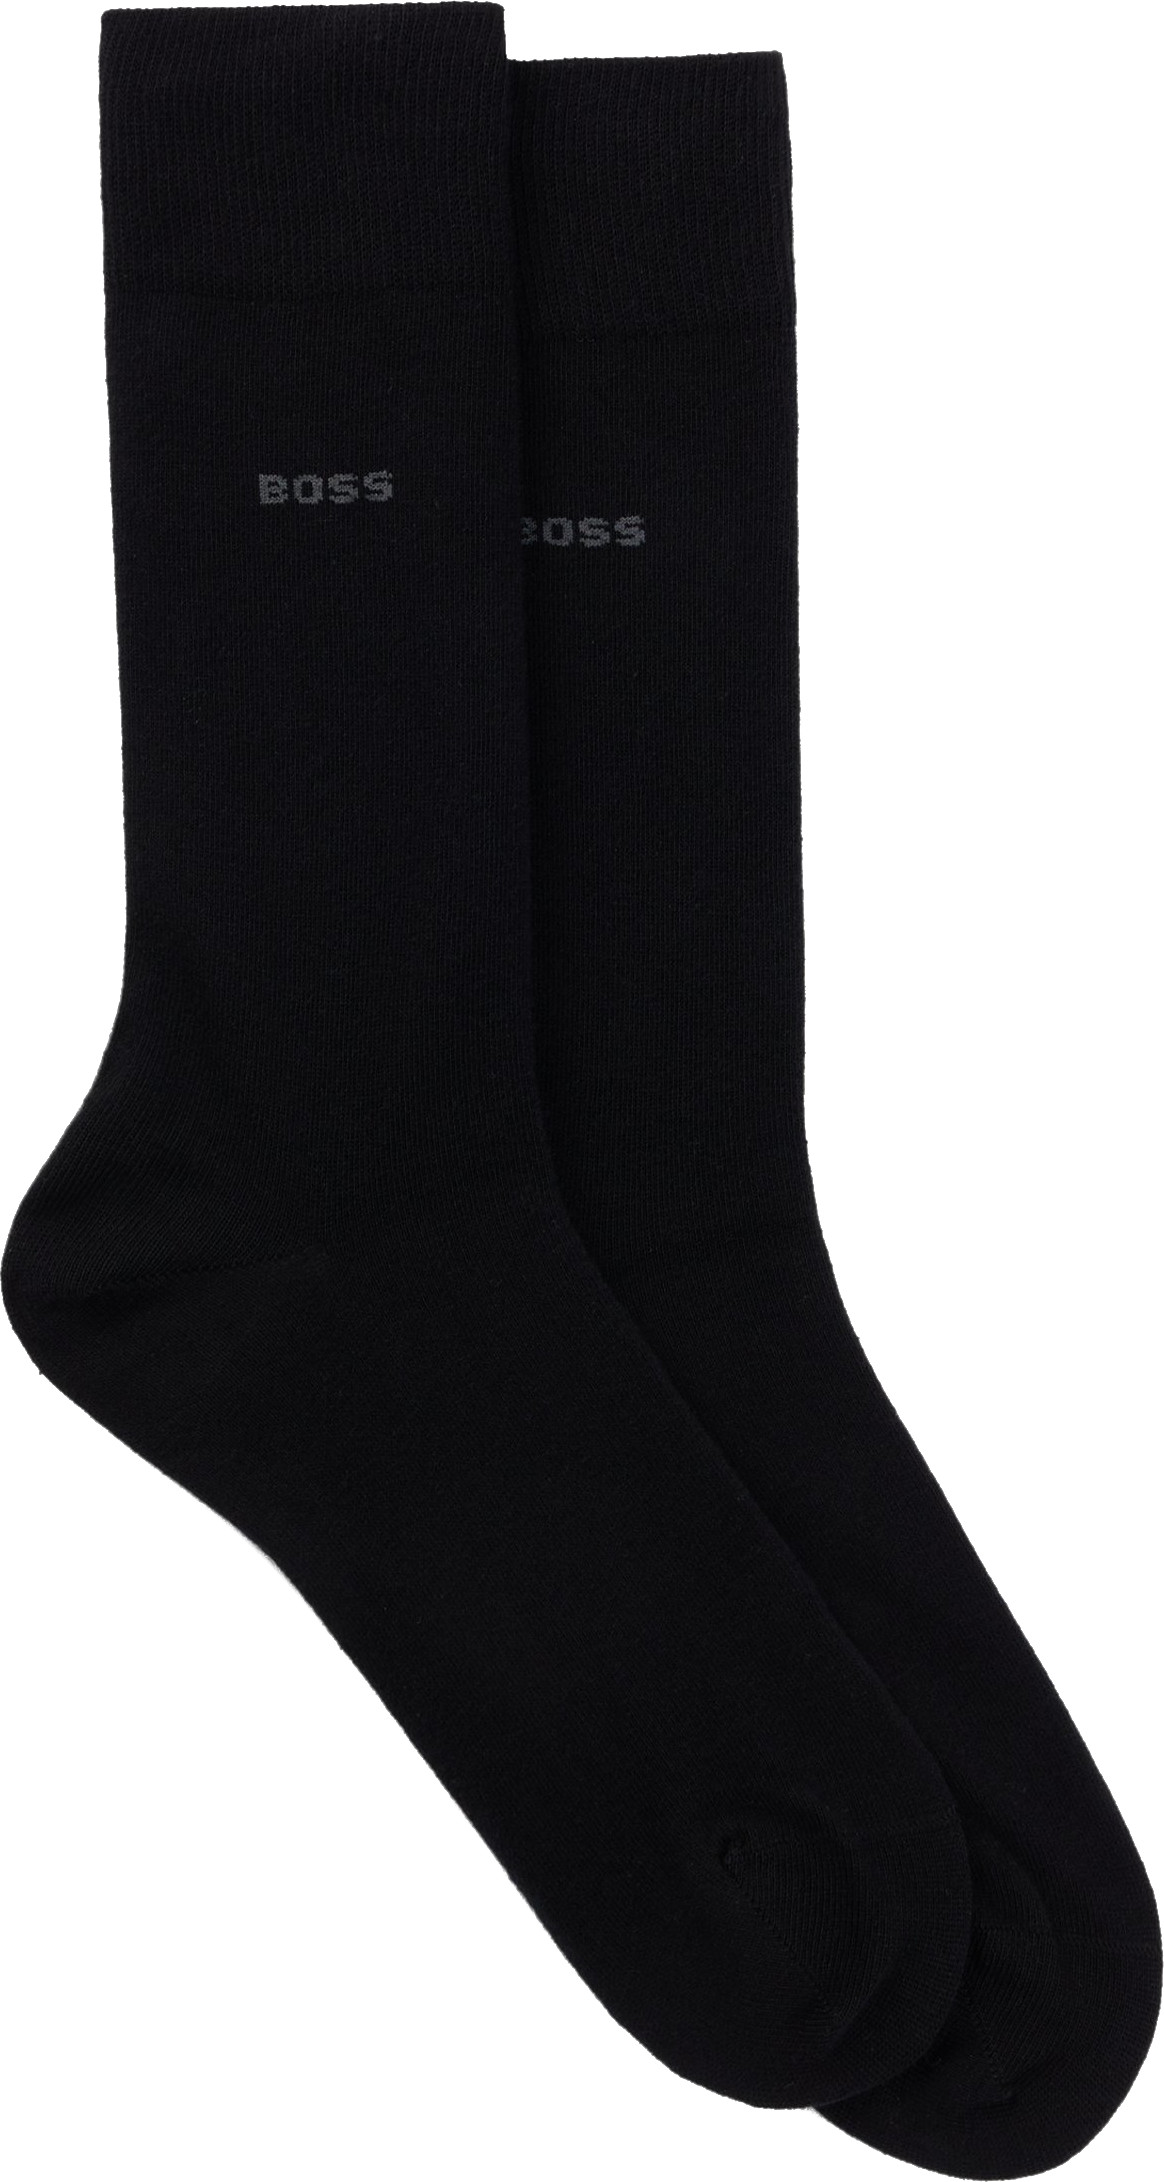 Hugo Boss 2 PACK - pánske ponožky BOSS 50516616-001 43-46